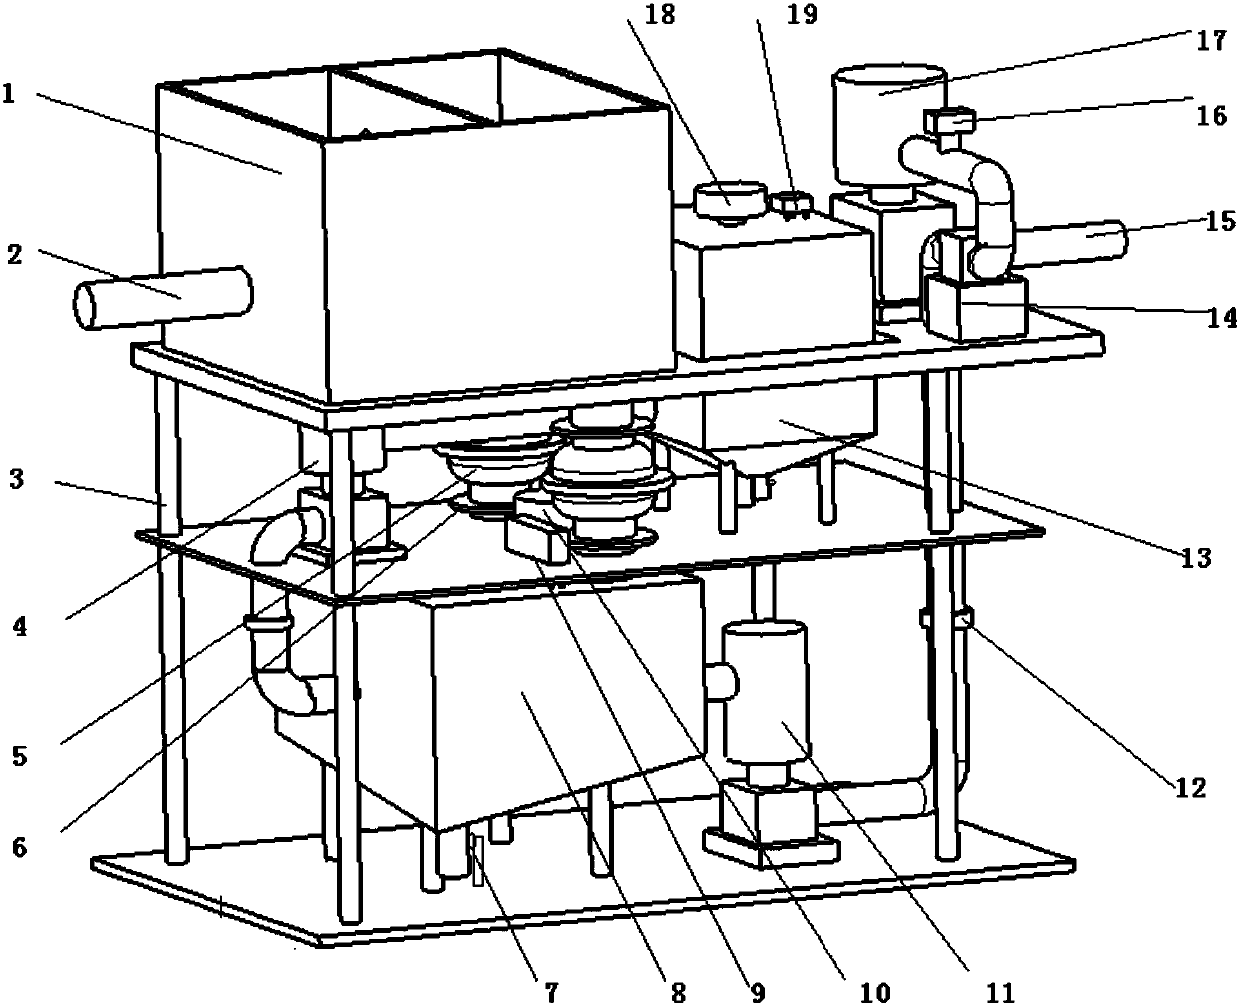 Novel filtering device for sewage treatment equipment